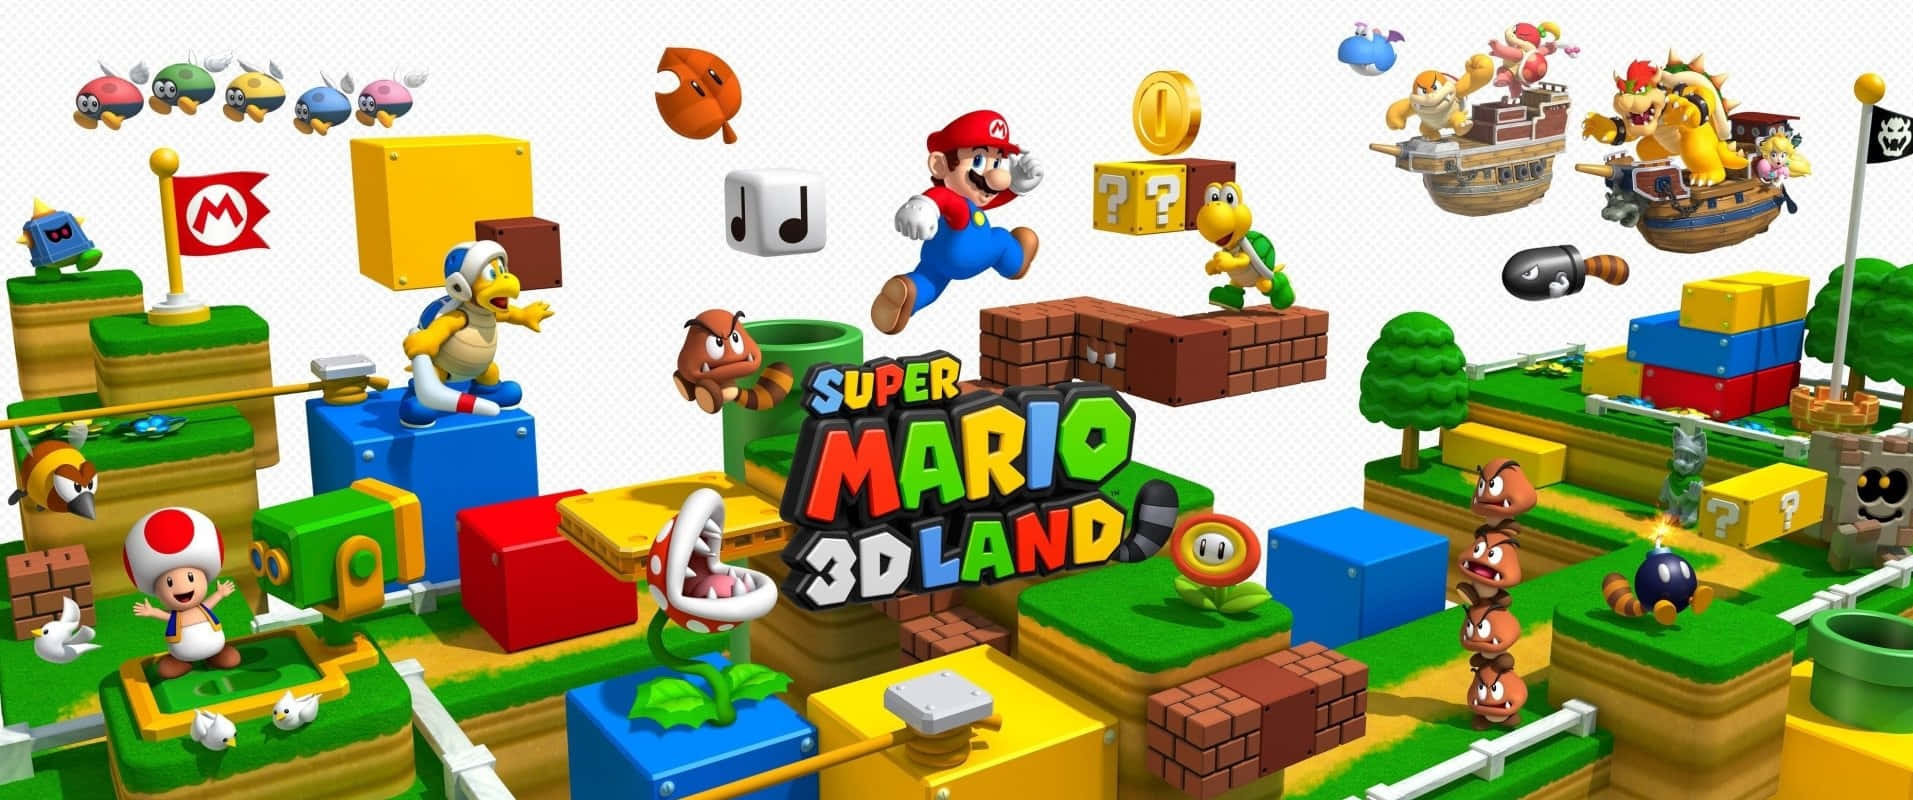 Unlock secrets within Super Mario 3D Wallpaper